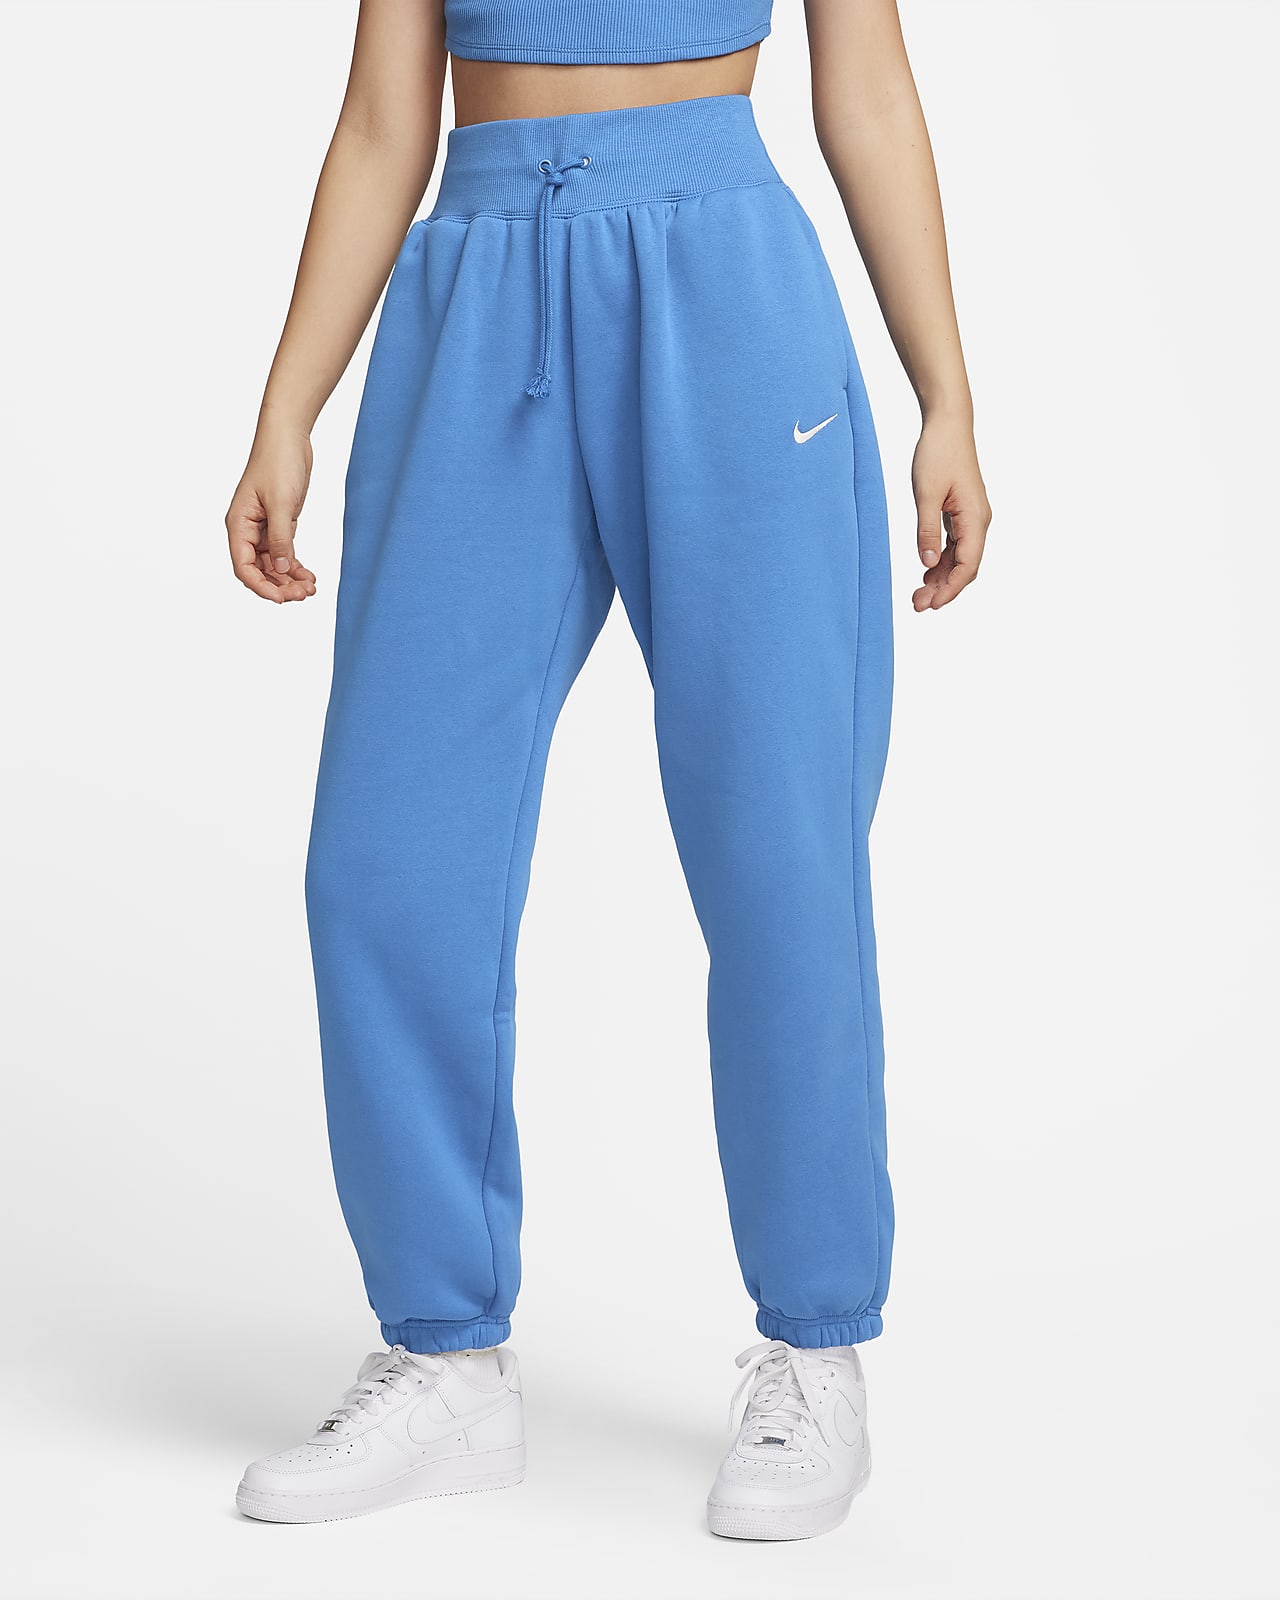 Pants de entrenamiento oversized de tiro alto para mujer Nike Sportswear Phoenix Fleece